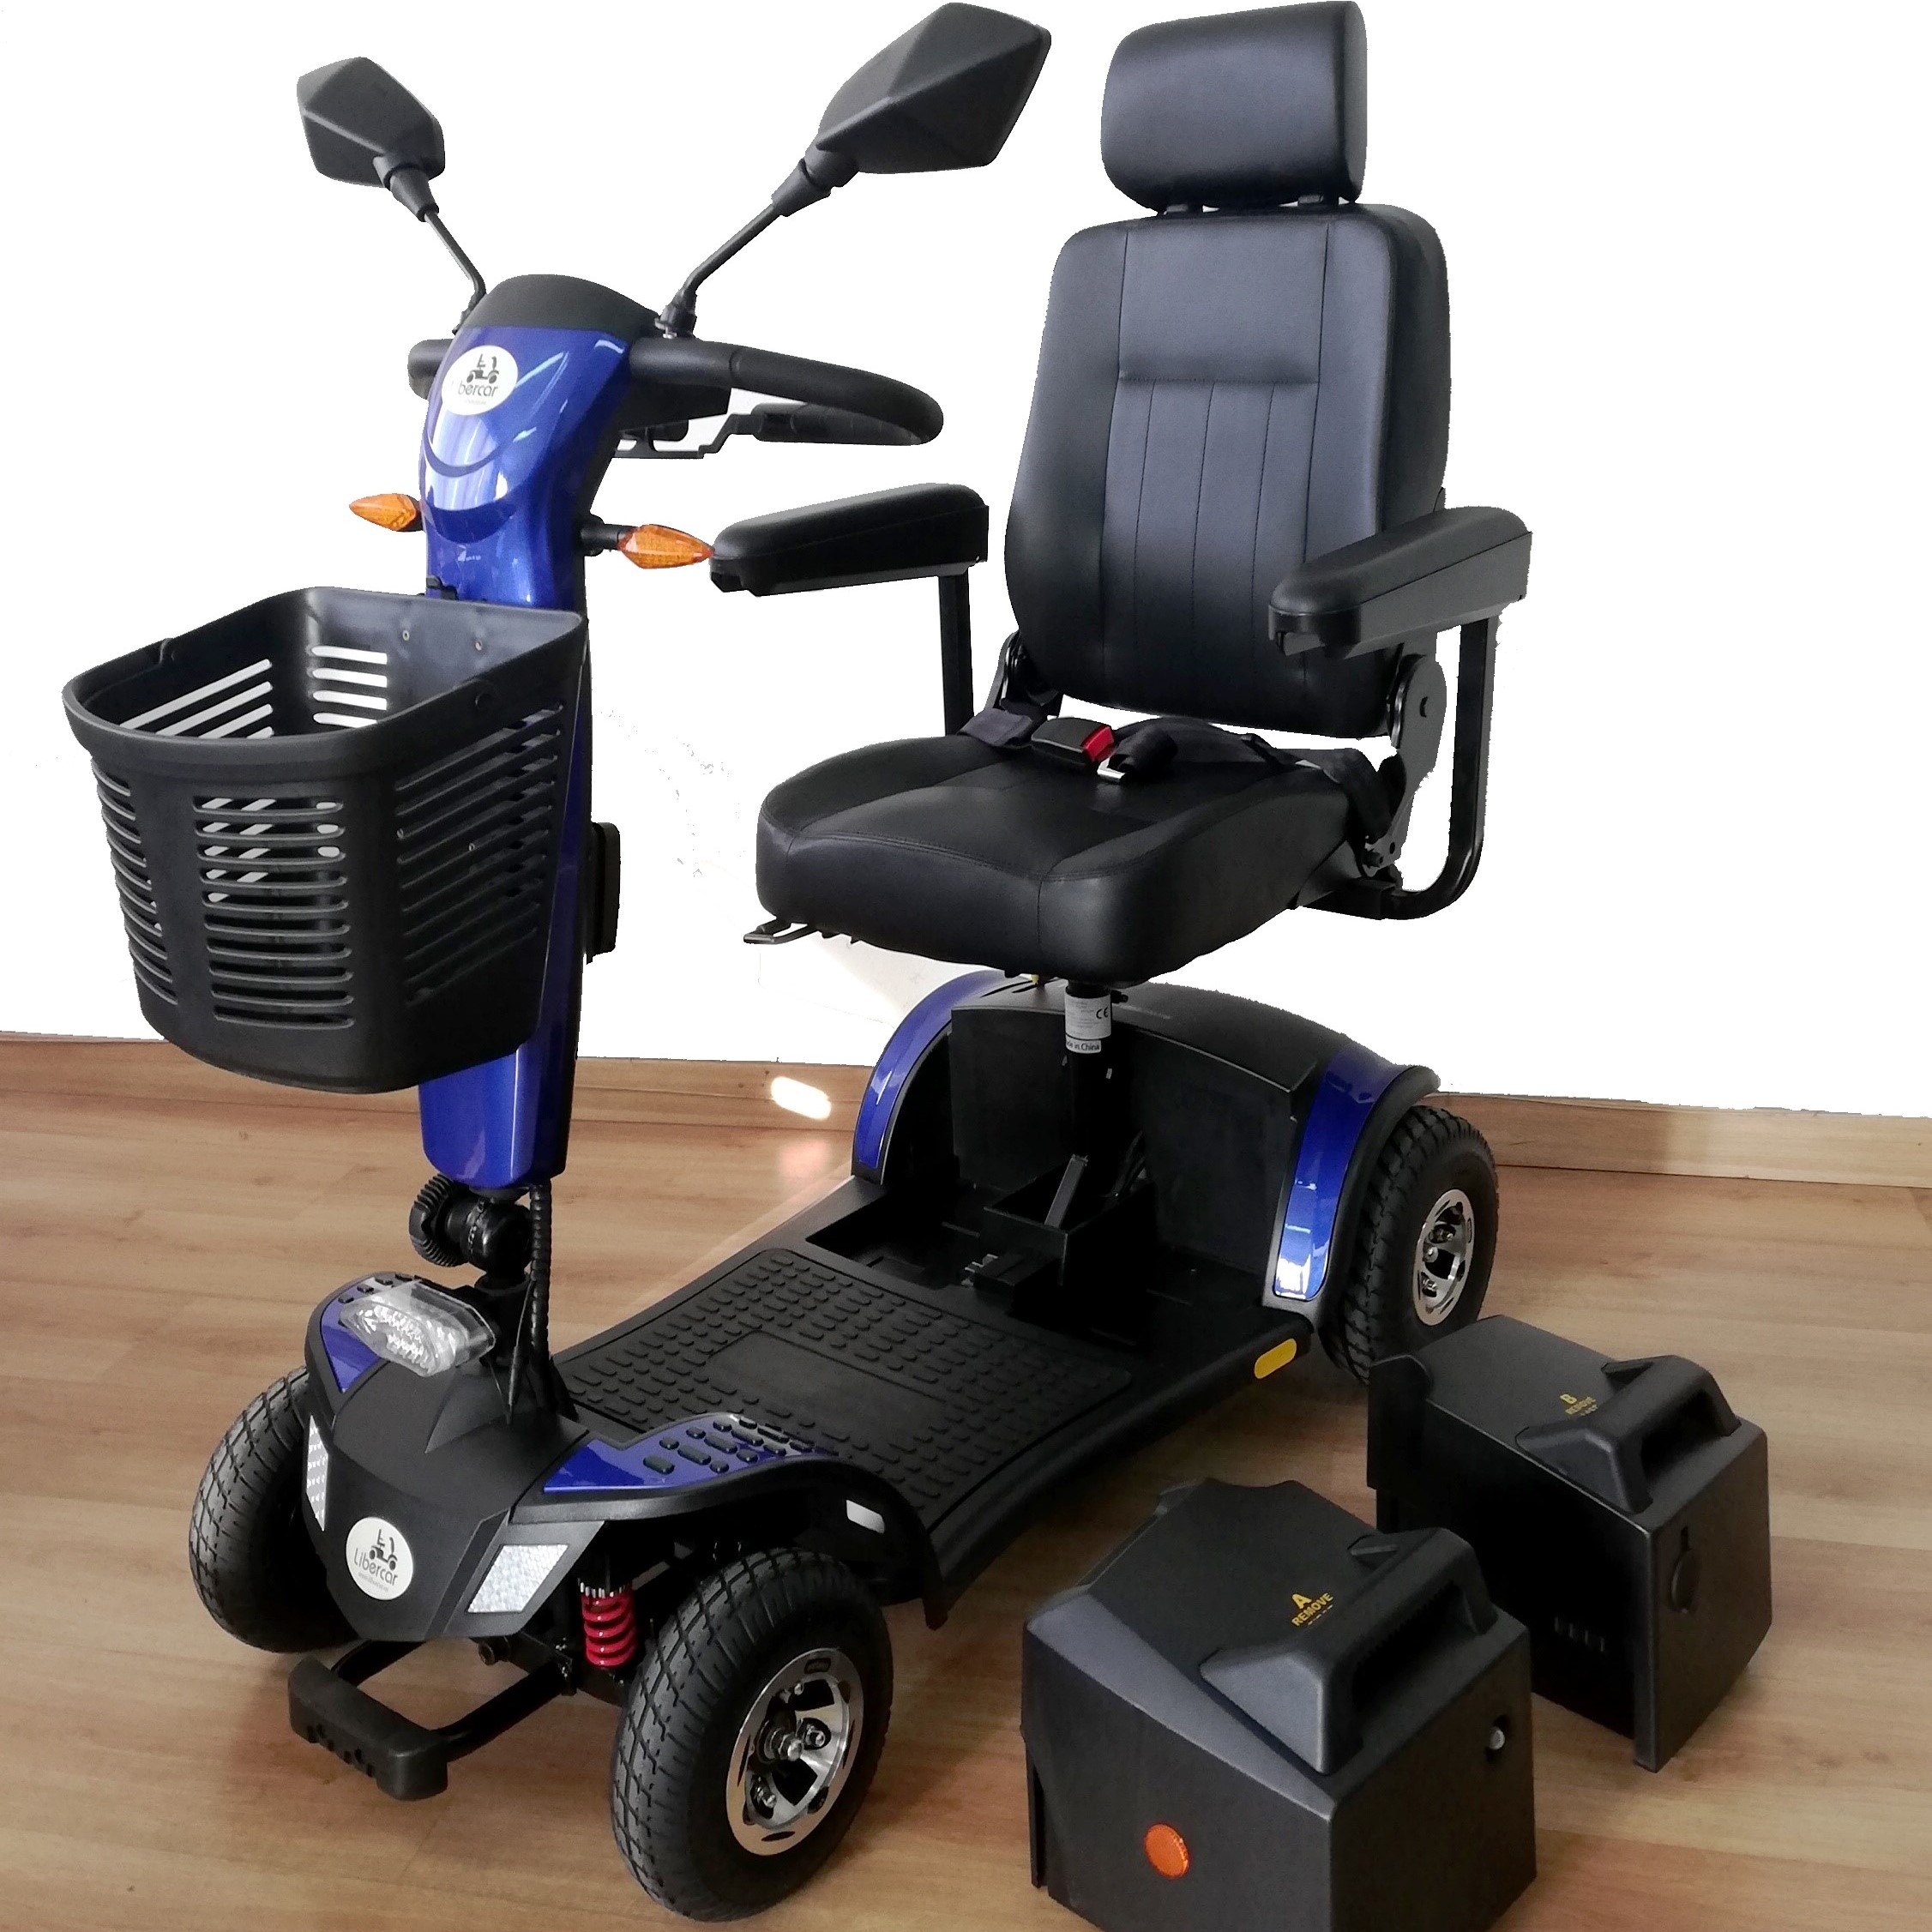 Comprar Scooter minusvalidos Dolce Vita Libercar online